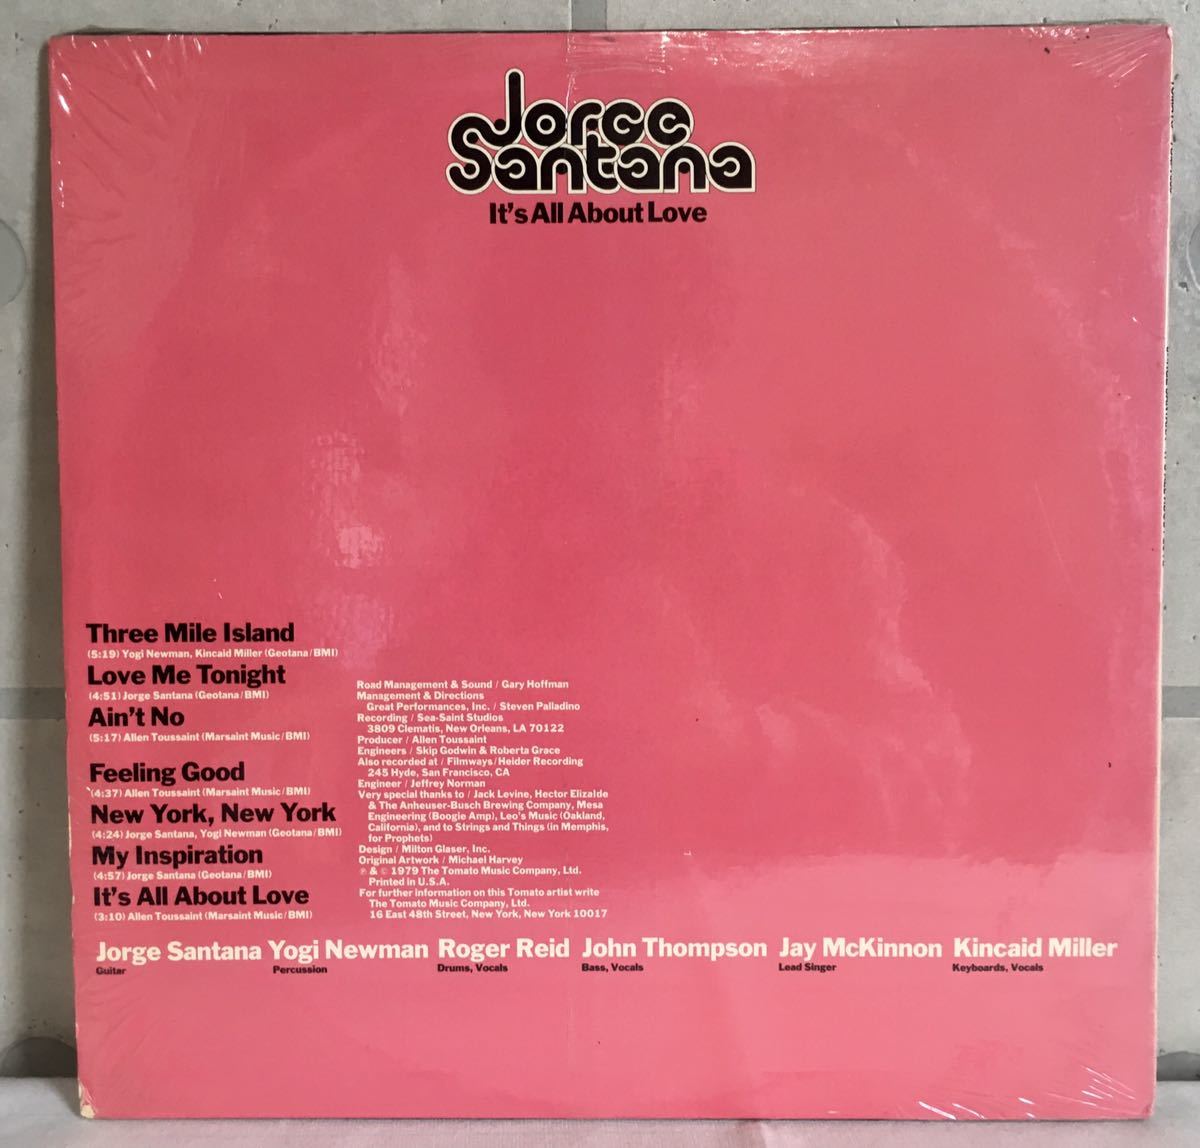 US盤 シュリンク LP / JORGE SANTANA (ホルヘ・サンタナ) - It’s All About Love (TOM-7033-A) / Free Soul AOR Disco Fusion Rock /_画像2